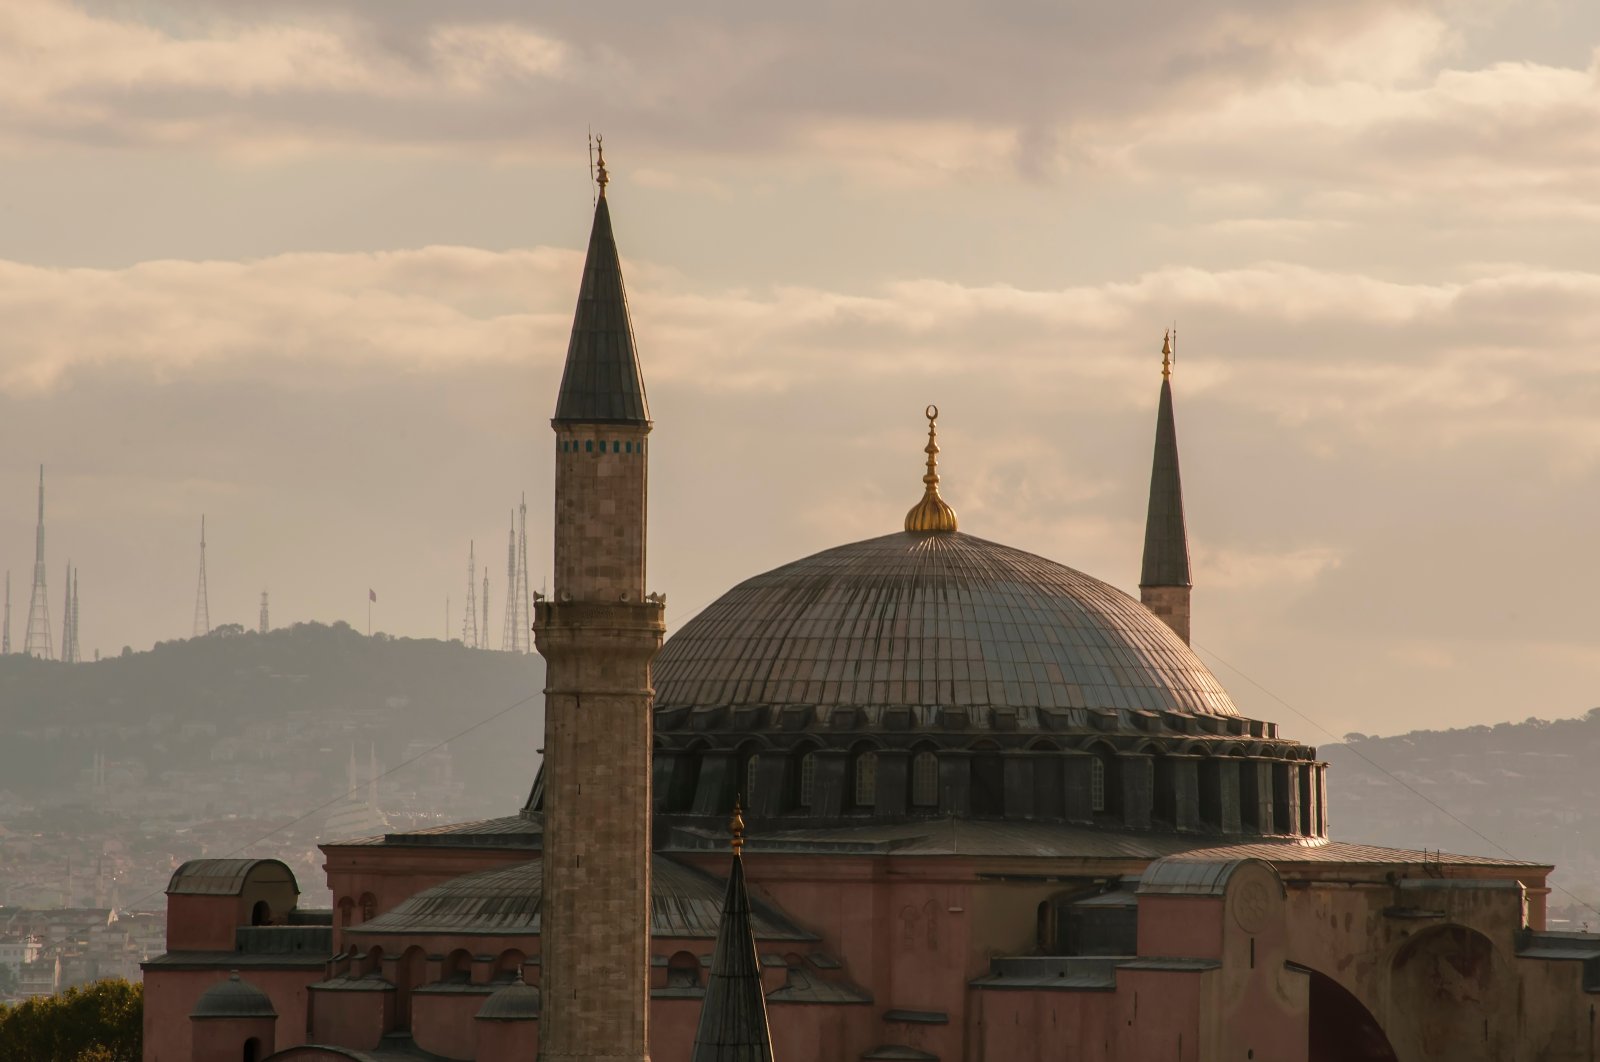 The dome and minarets of the Hagia Sophia in Istanbul, Türkiye. (Shutterstock Photo)